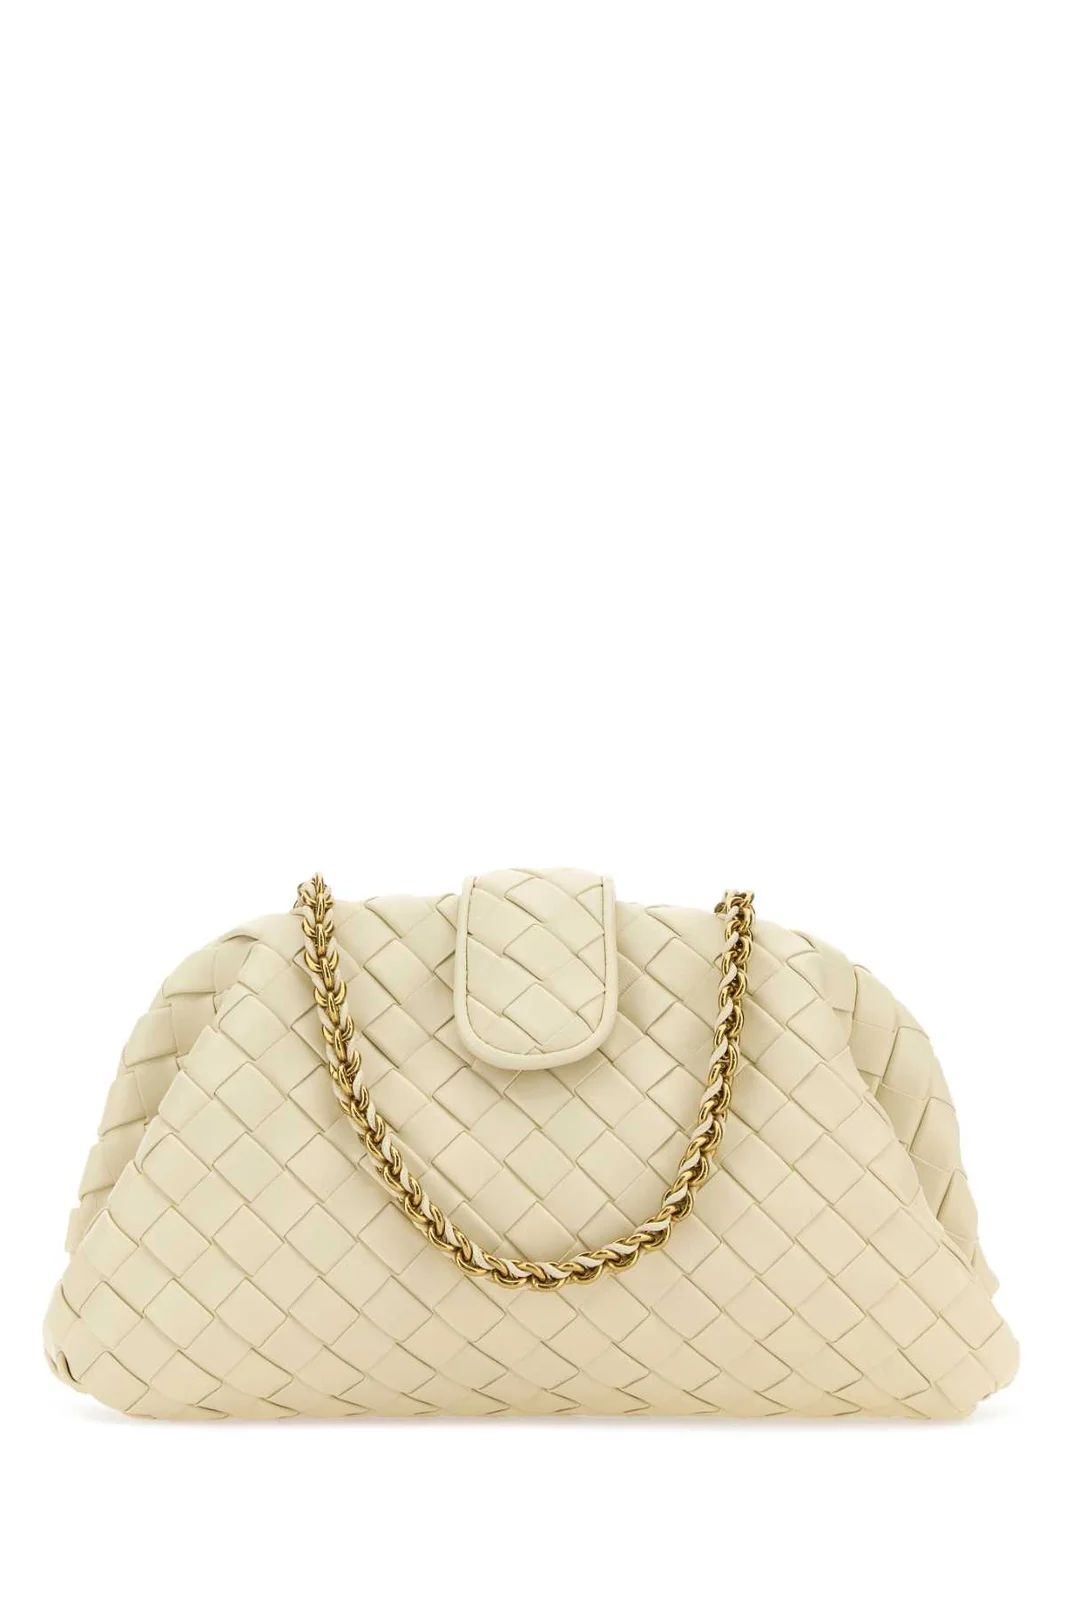 Bottega Veneta Chain Linked Teen Lauren 1980 Shoulder Bag | Cettire Global